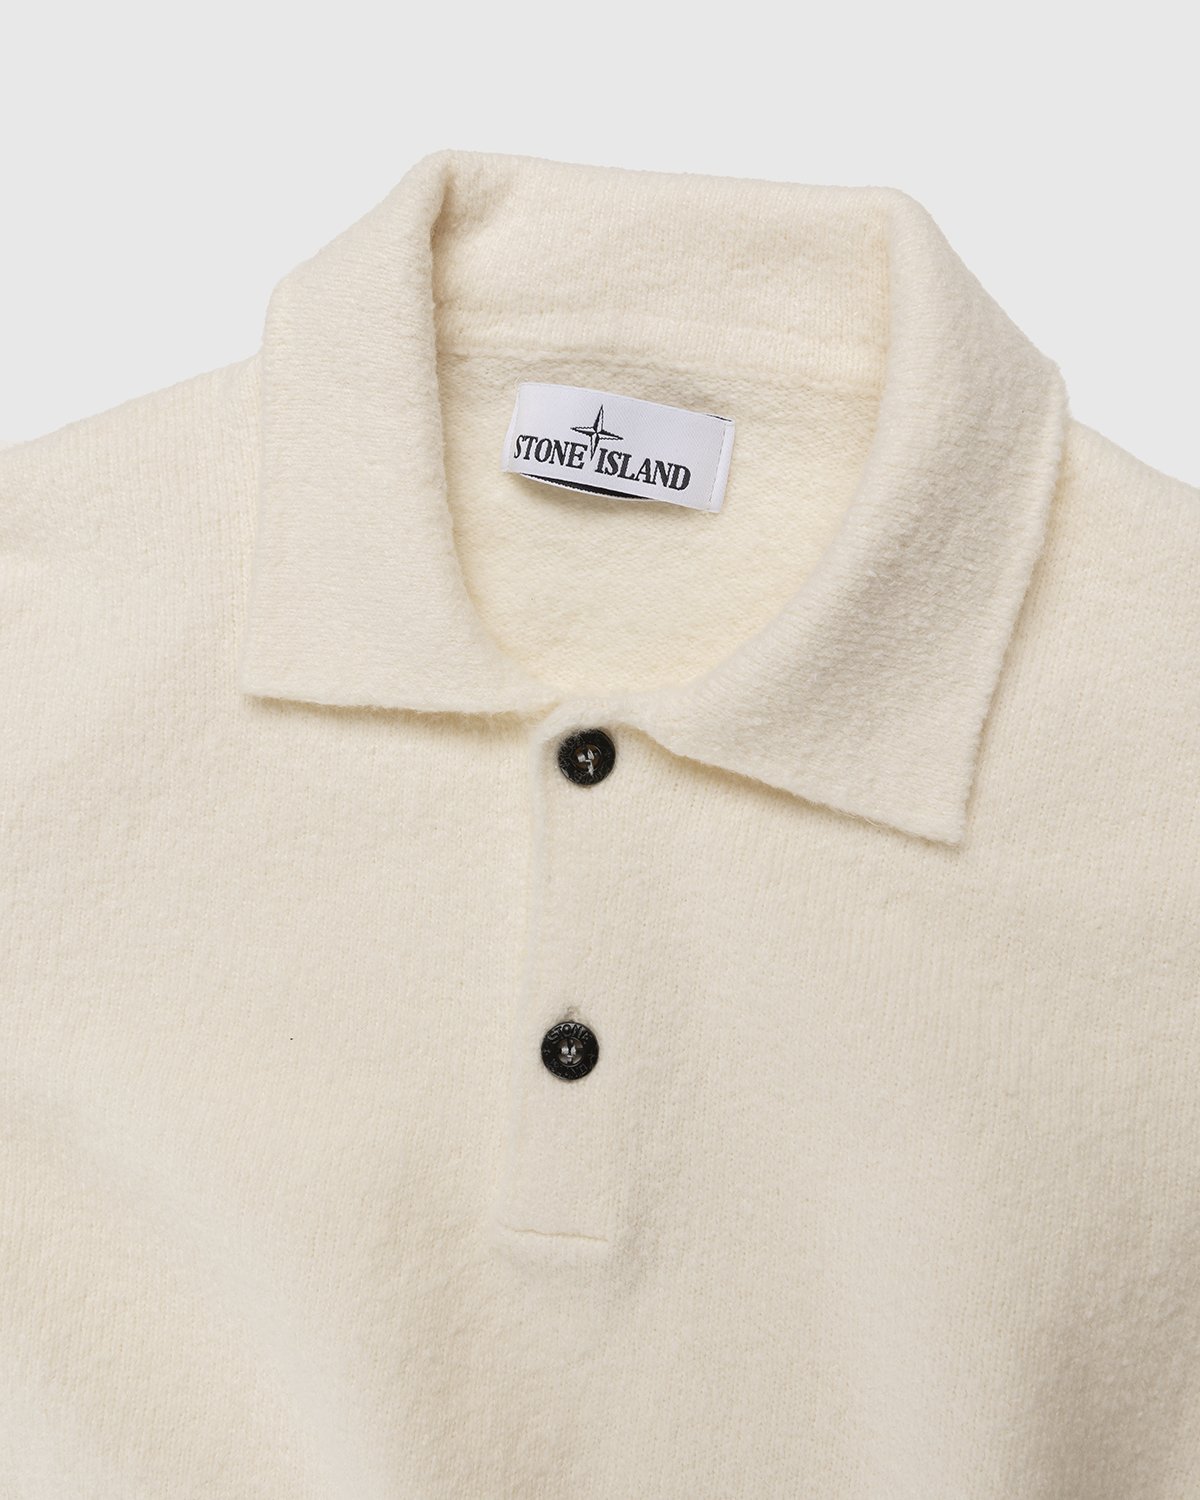 Stone Island - 549D2 Knit Polo Shirt Natural - Clothing - White - Image 6